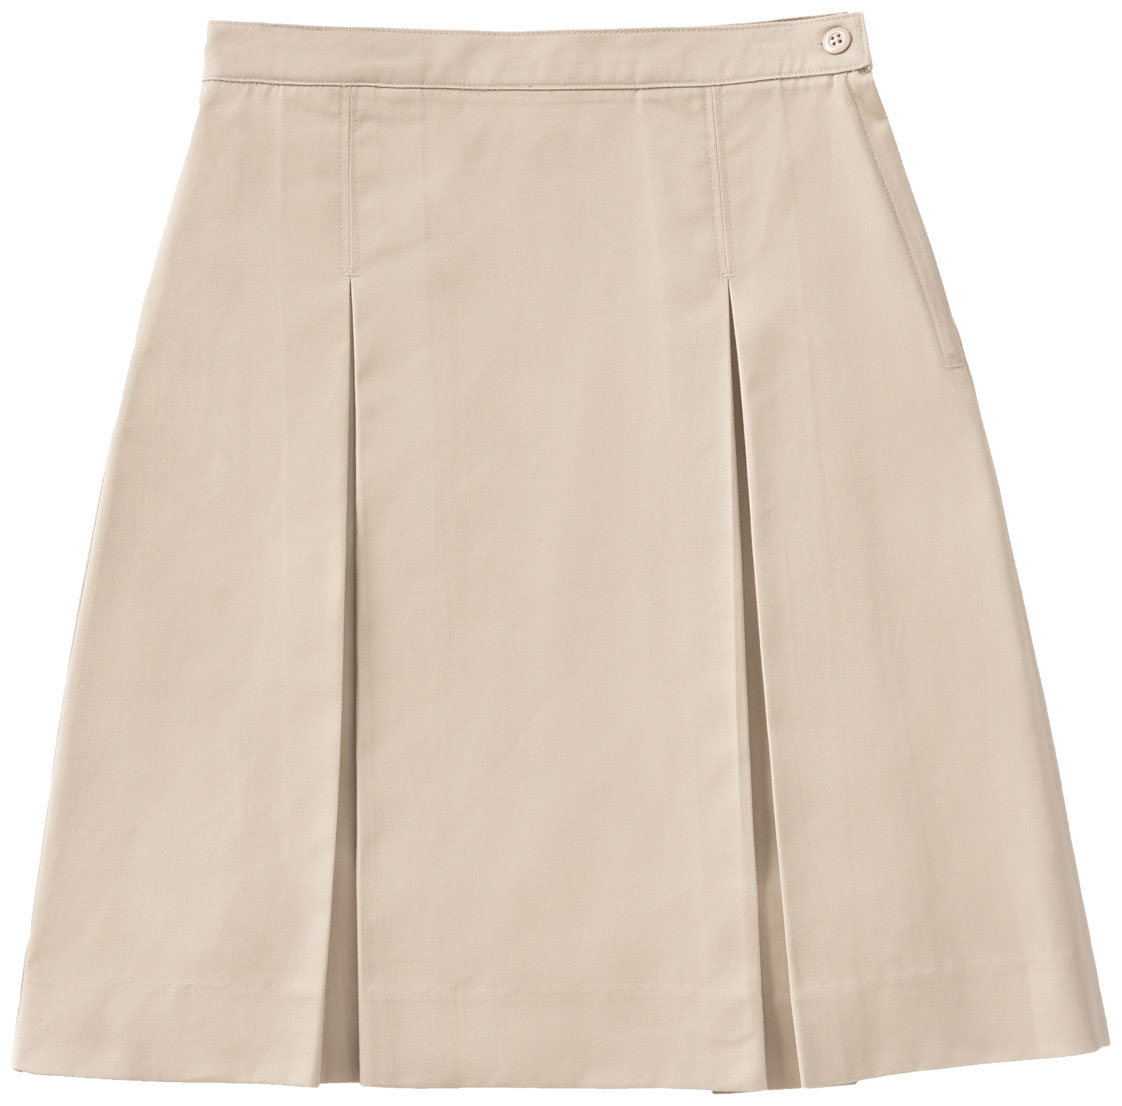 ESA-Girls 1/2 size khaki skirt